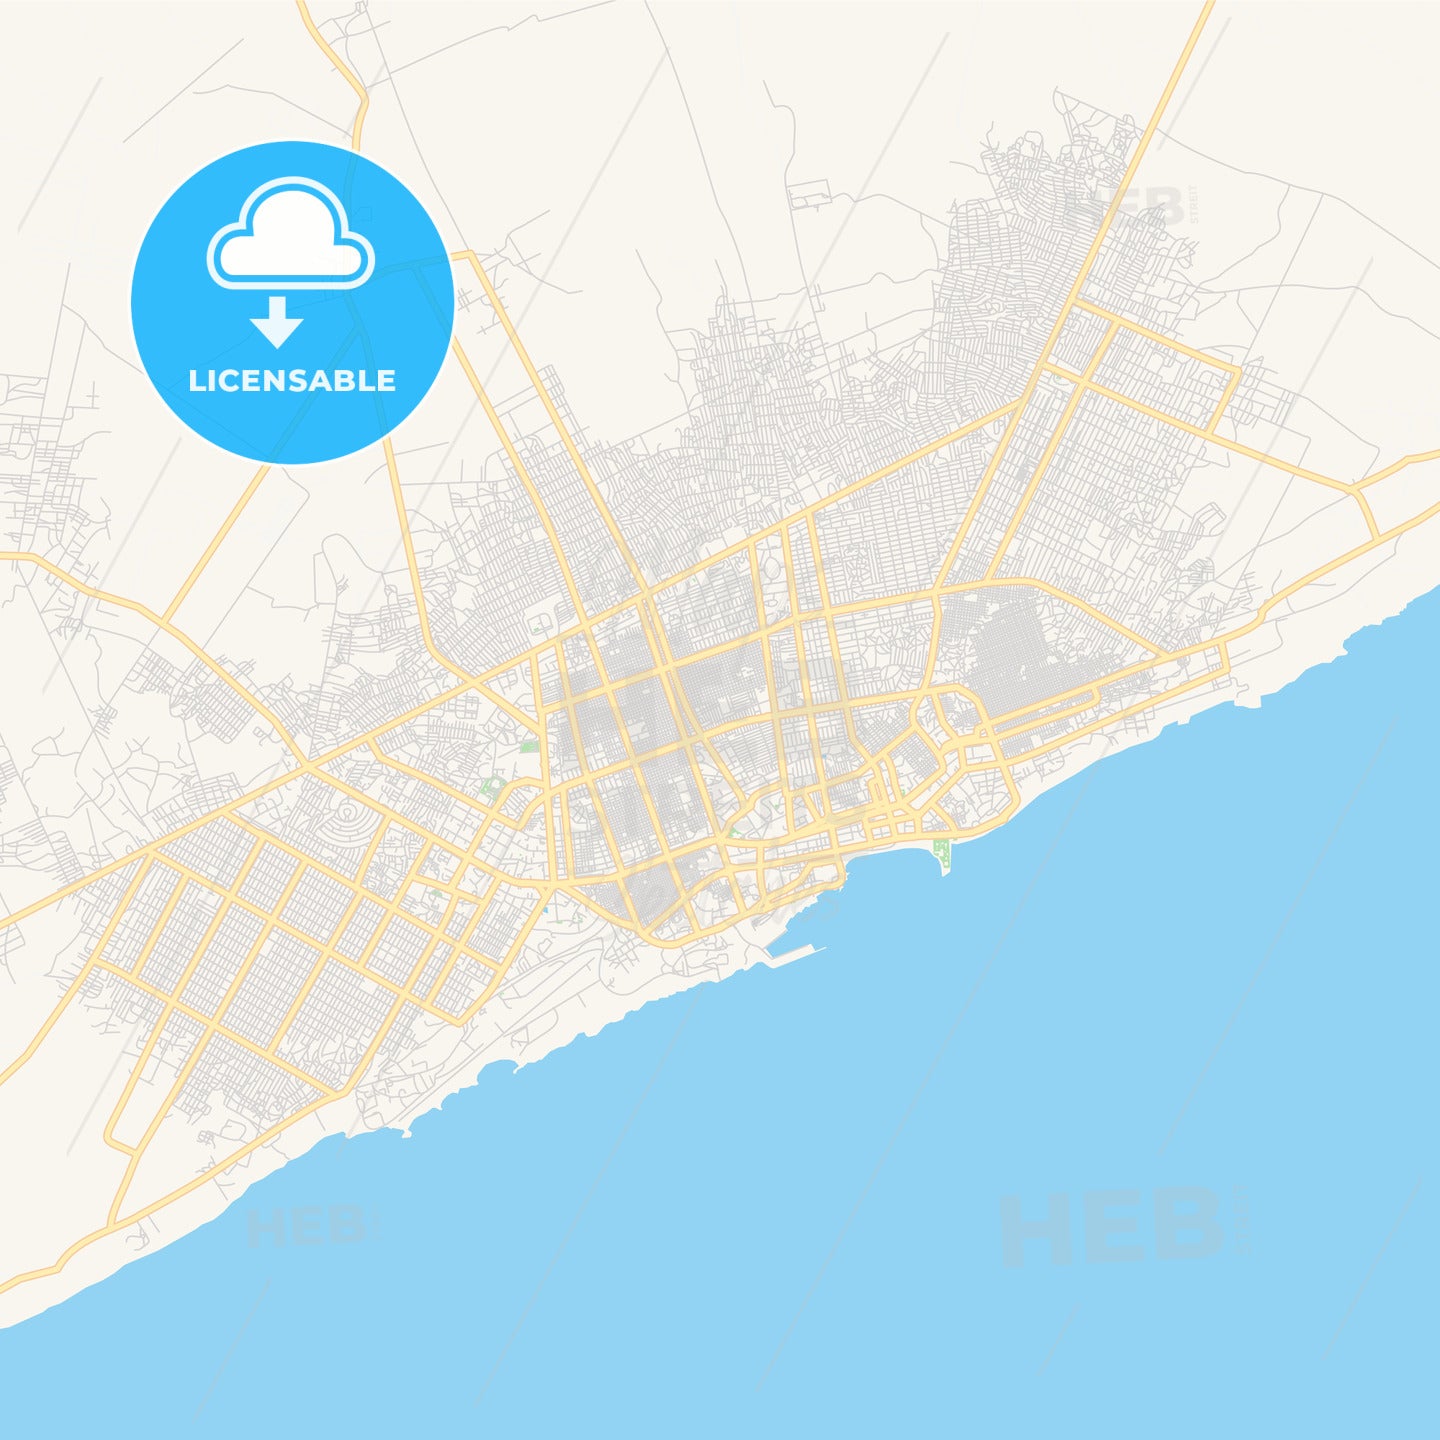 Printable street map of Mogadishu, Somalia